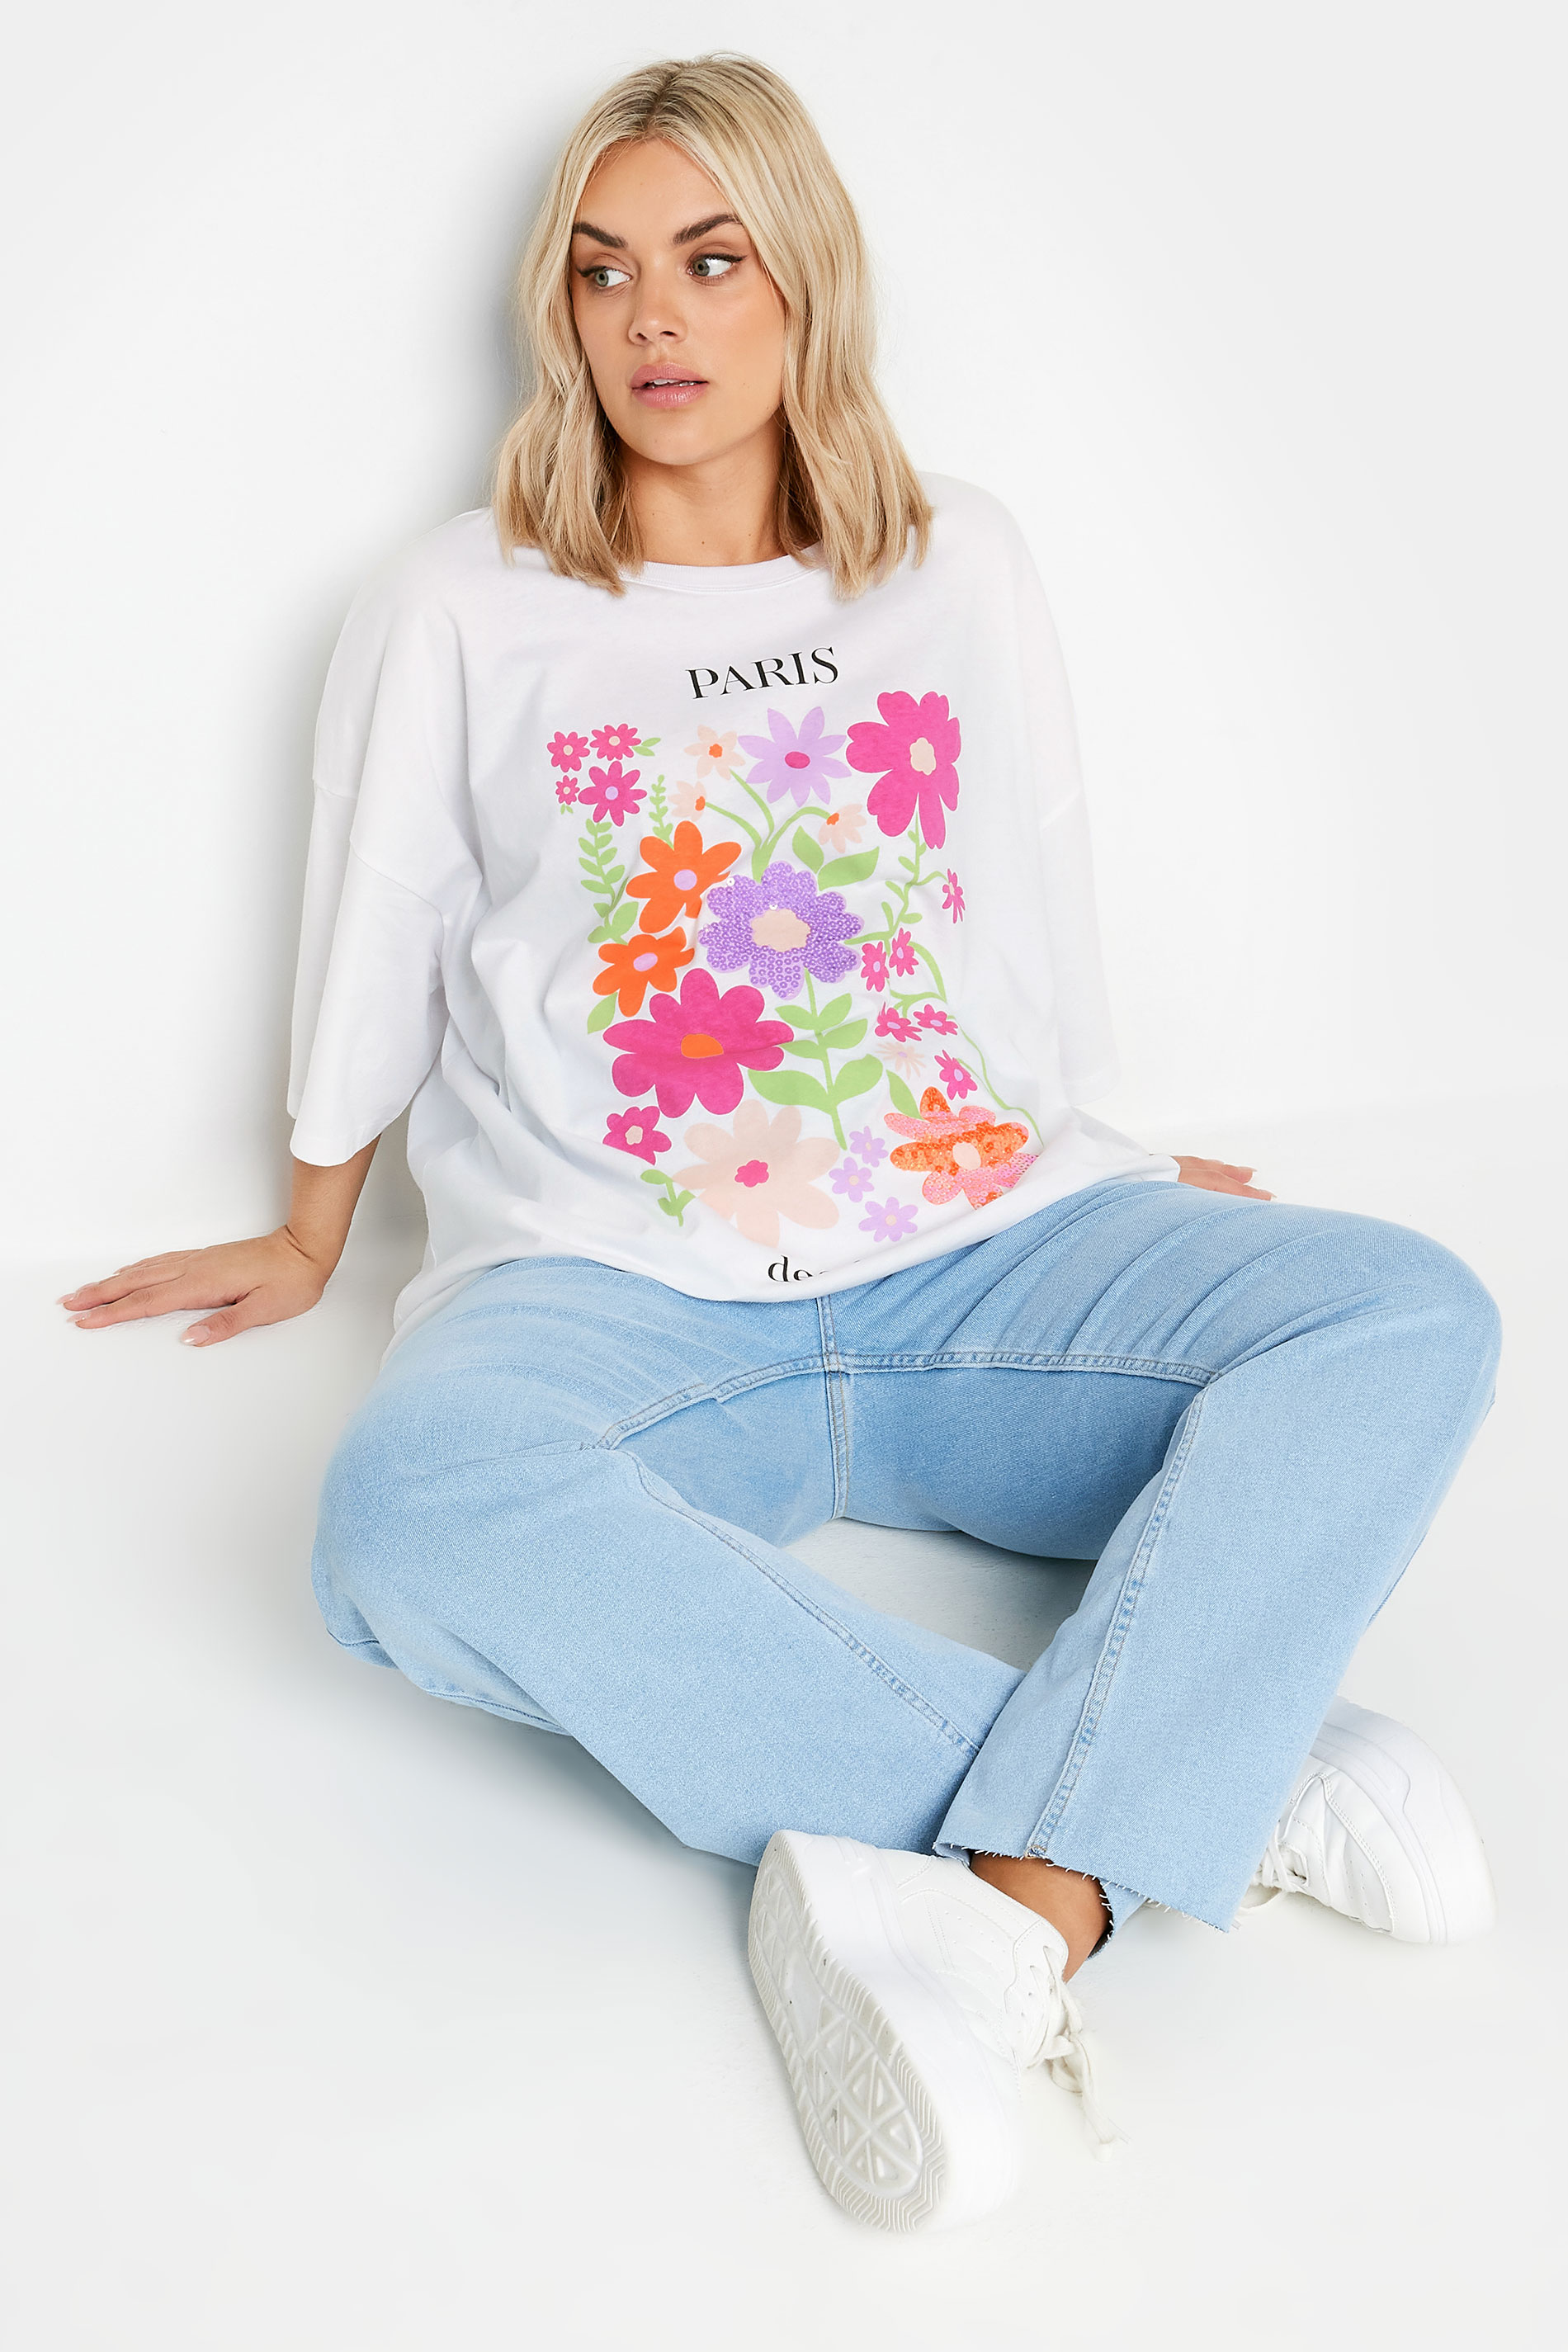 YOURS Plus Size White Floral Print 'Paris' Slogan Oversized T-Shirt | Yours Clothing 2